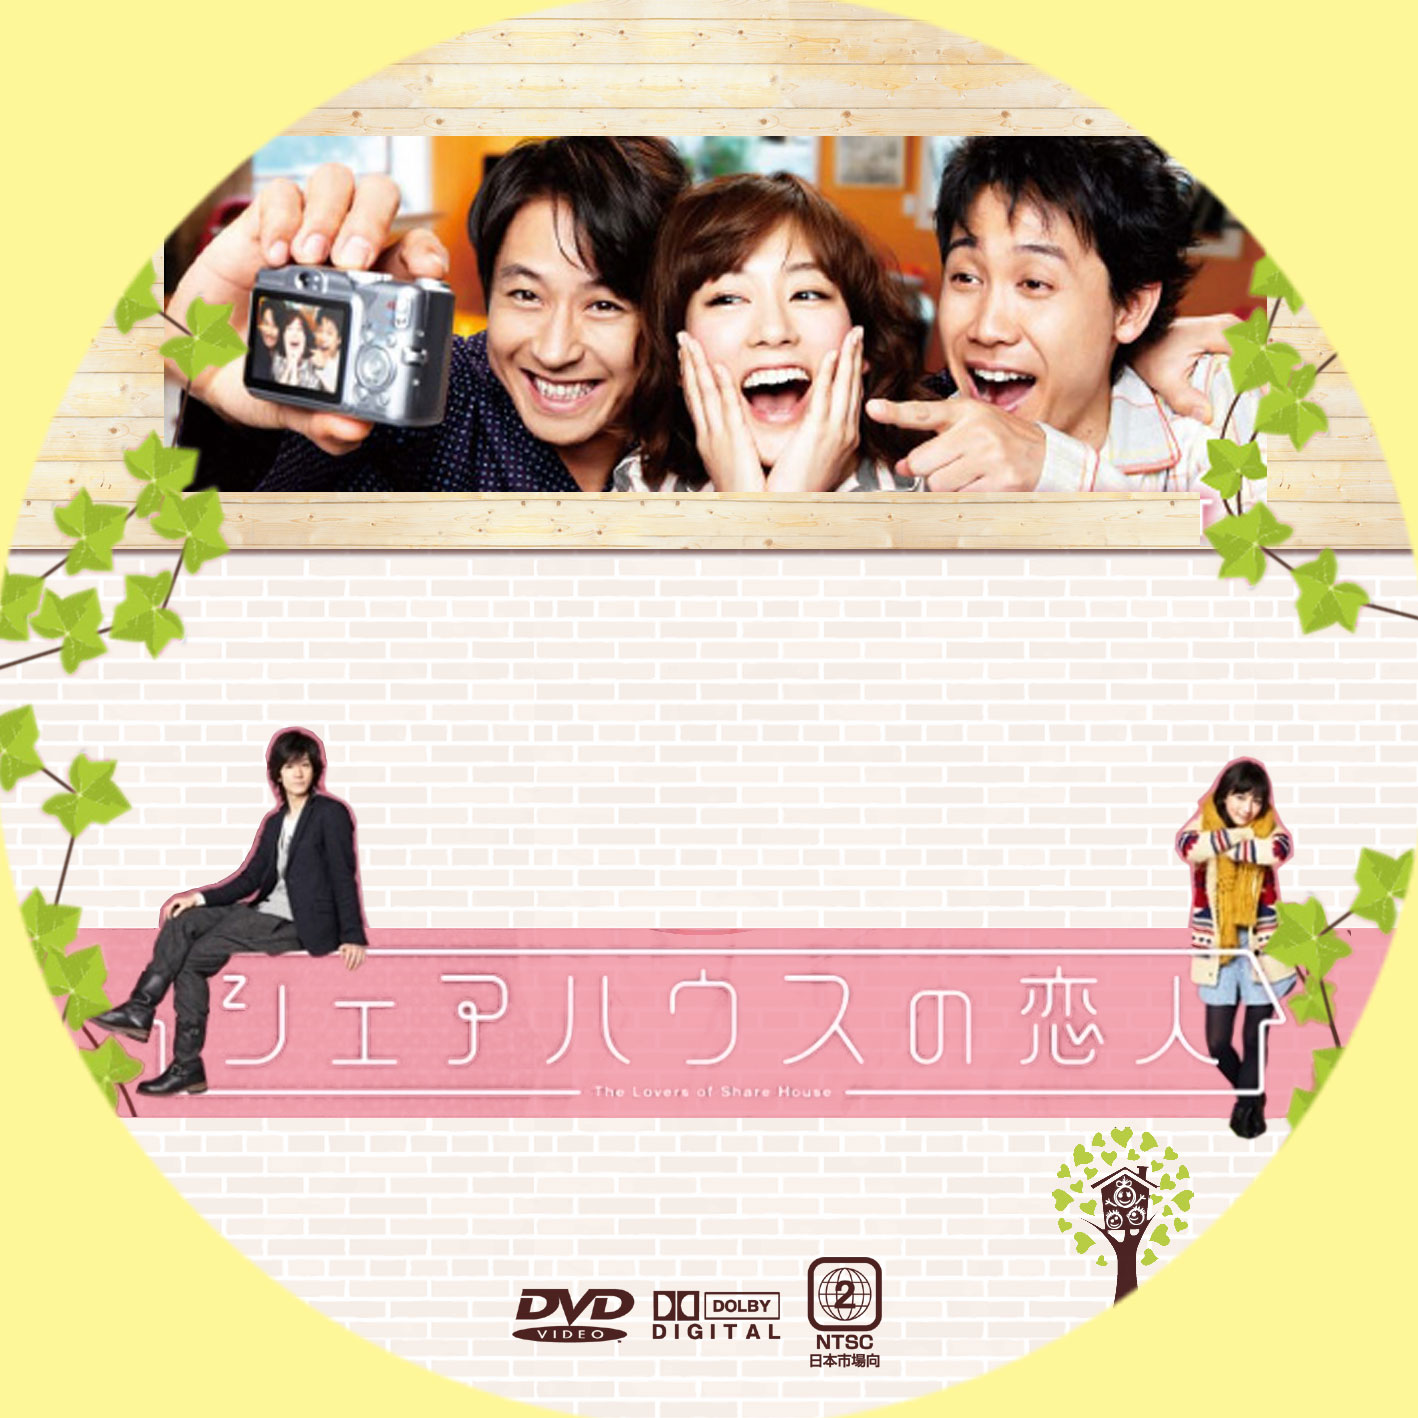 GINMAKU Custom DVD＆Blu-ray labels blog版／映画・洋画・邦画 